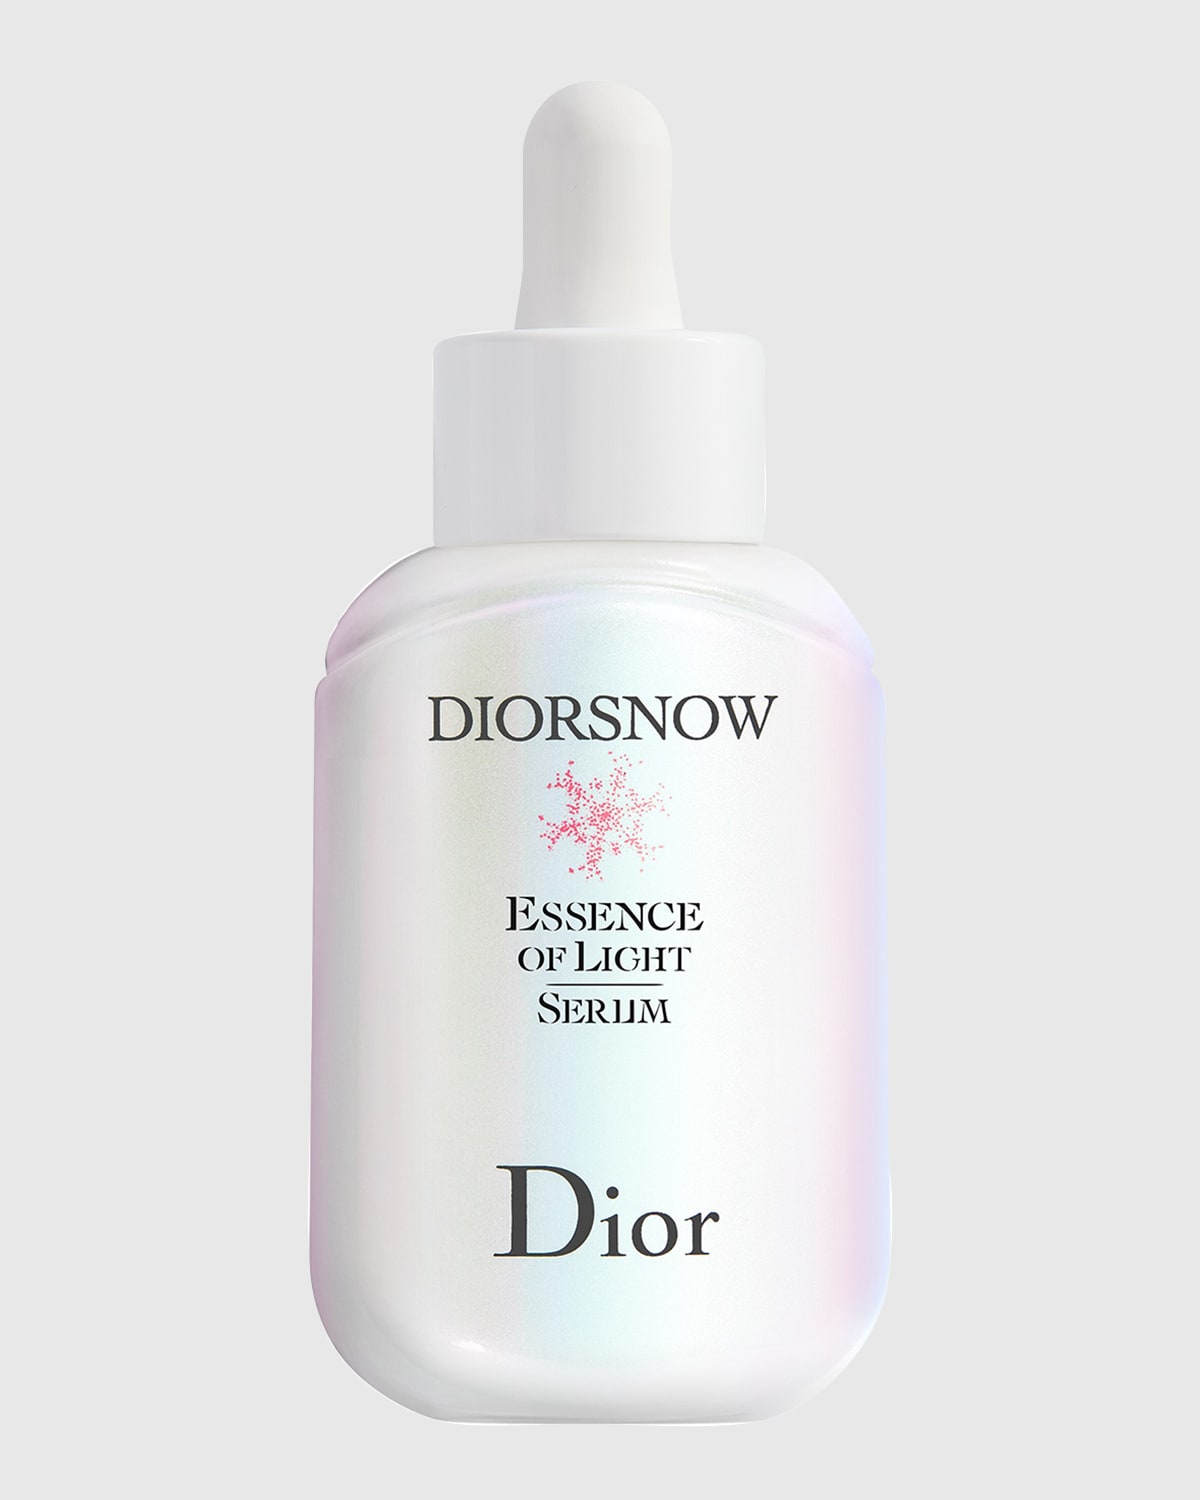 1 oz. Diorsnow Essence of Light Brightening Milk Serum